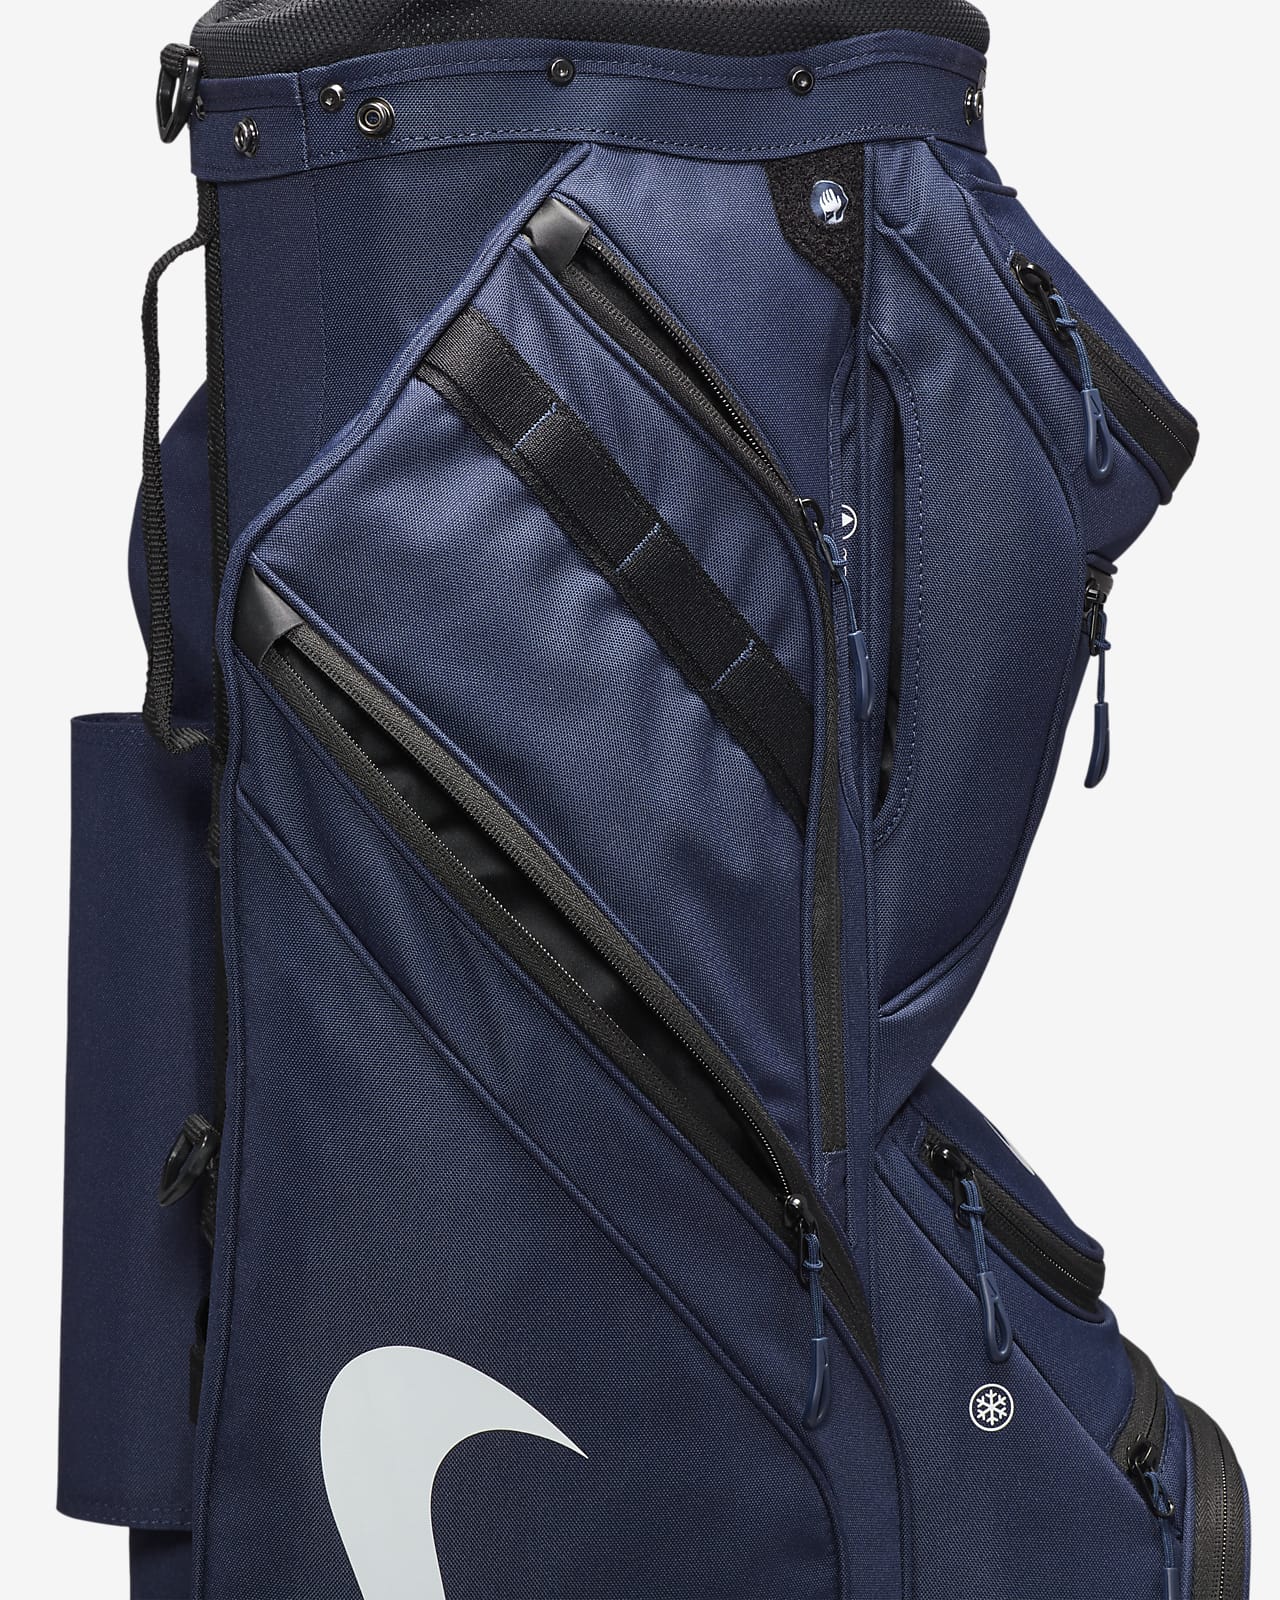 Nike Performance Cart Golf Bag.